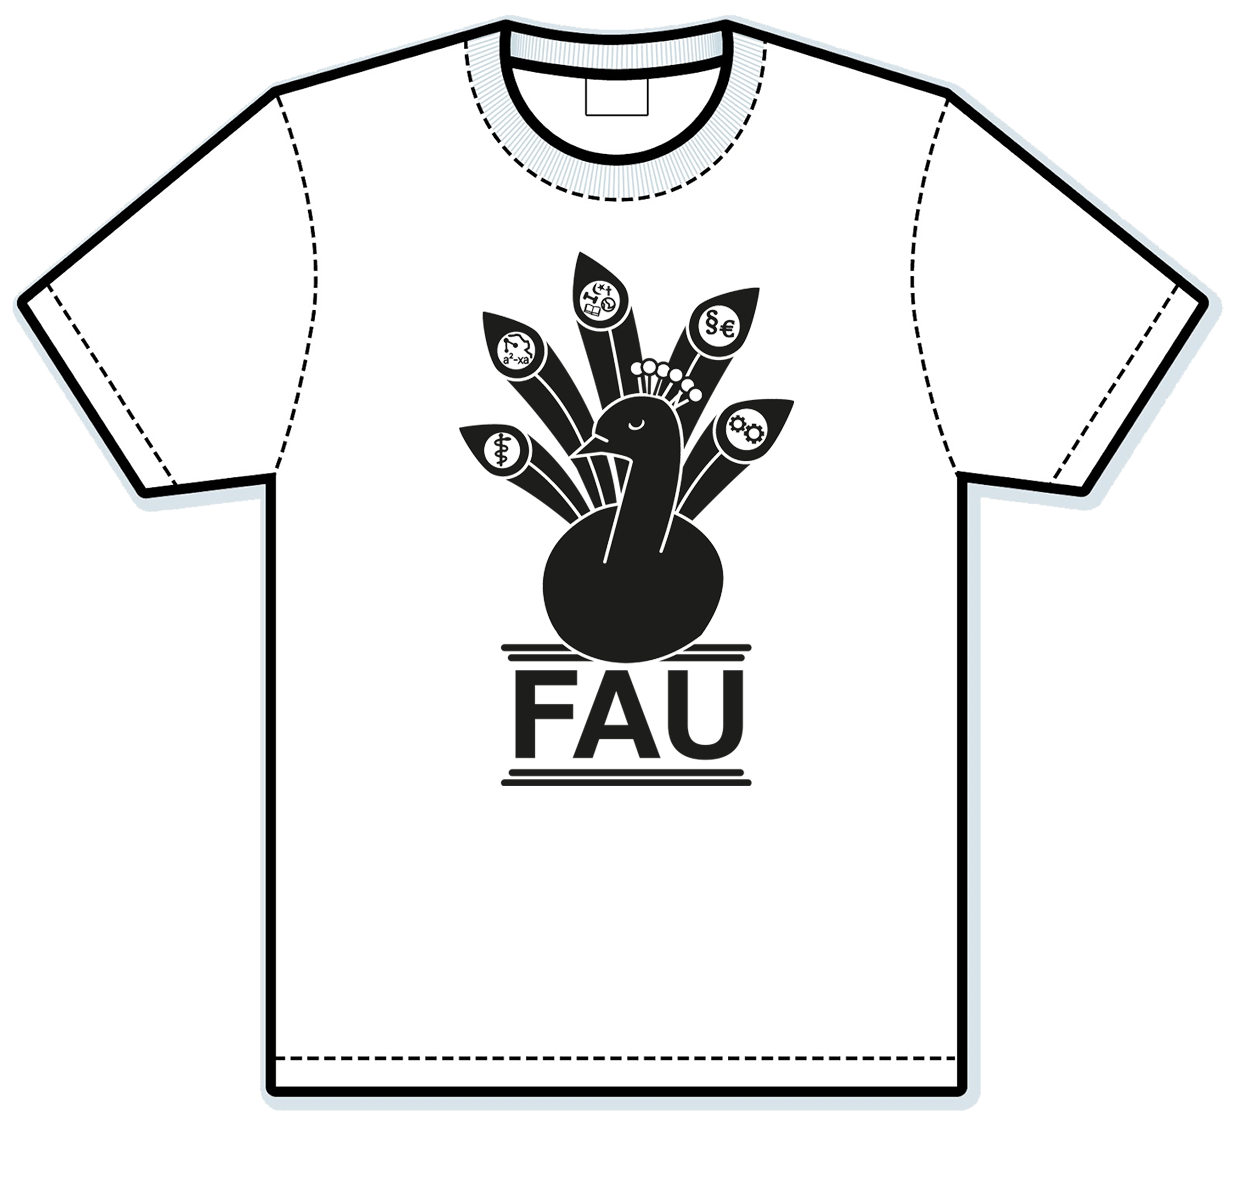 Placed 4th (tie vote): "pFAU", designed by Carmen Oberlechner. (Image: FAU T-shirt Design Contest 2016/17)